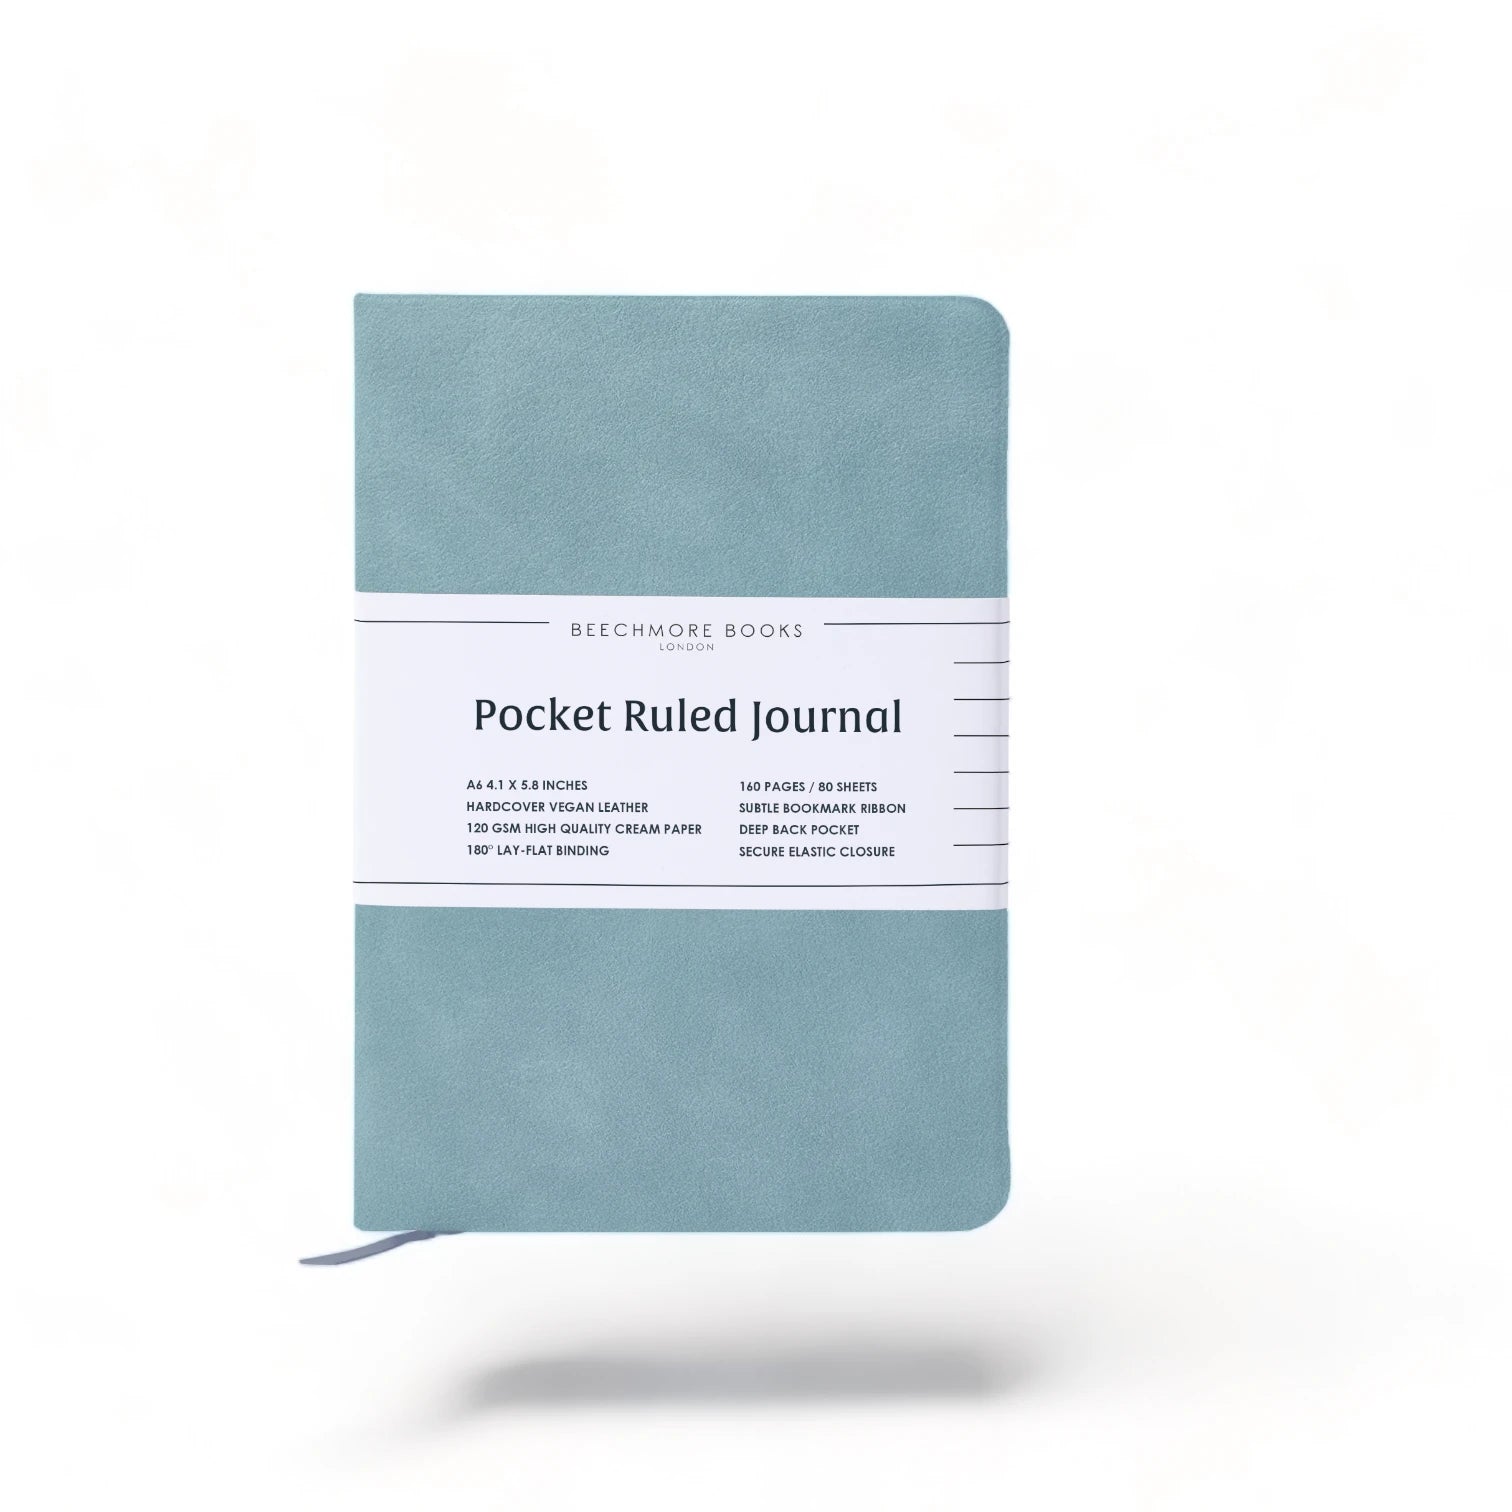 Pocket ruled journal from beechmore books-Photoroom.webp__PID:b79e8075-6e56-4262-8a6d-849183b8adf9